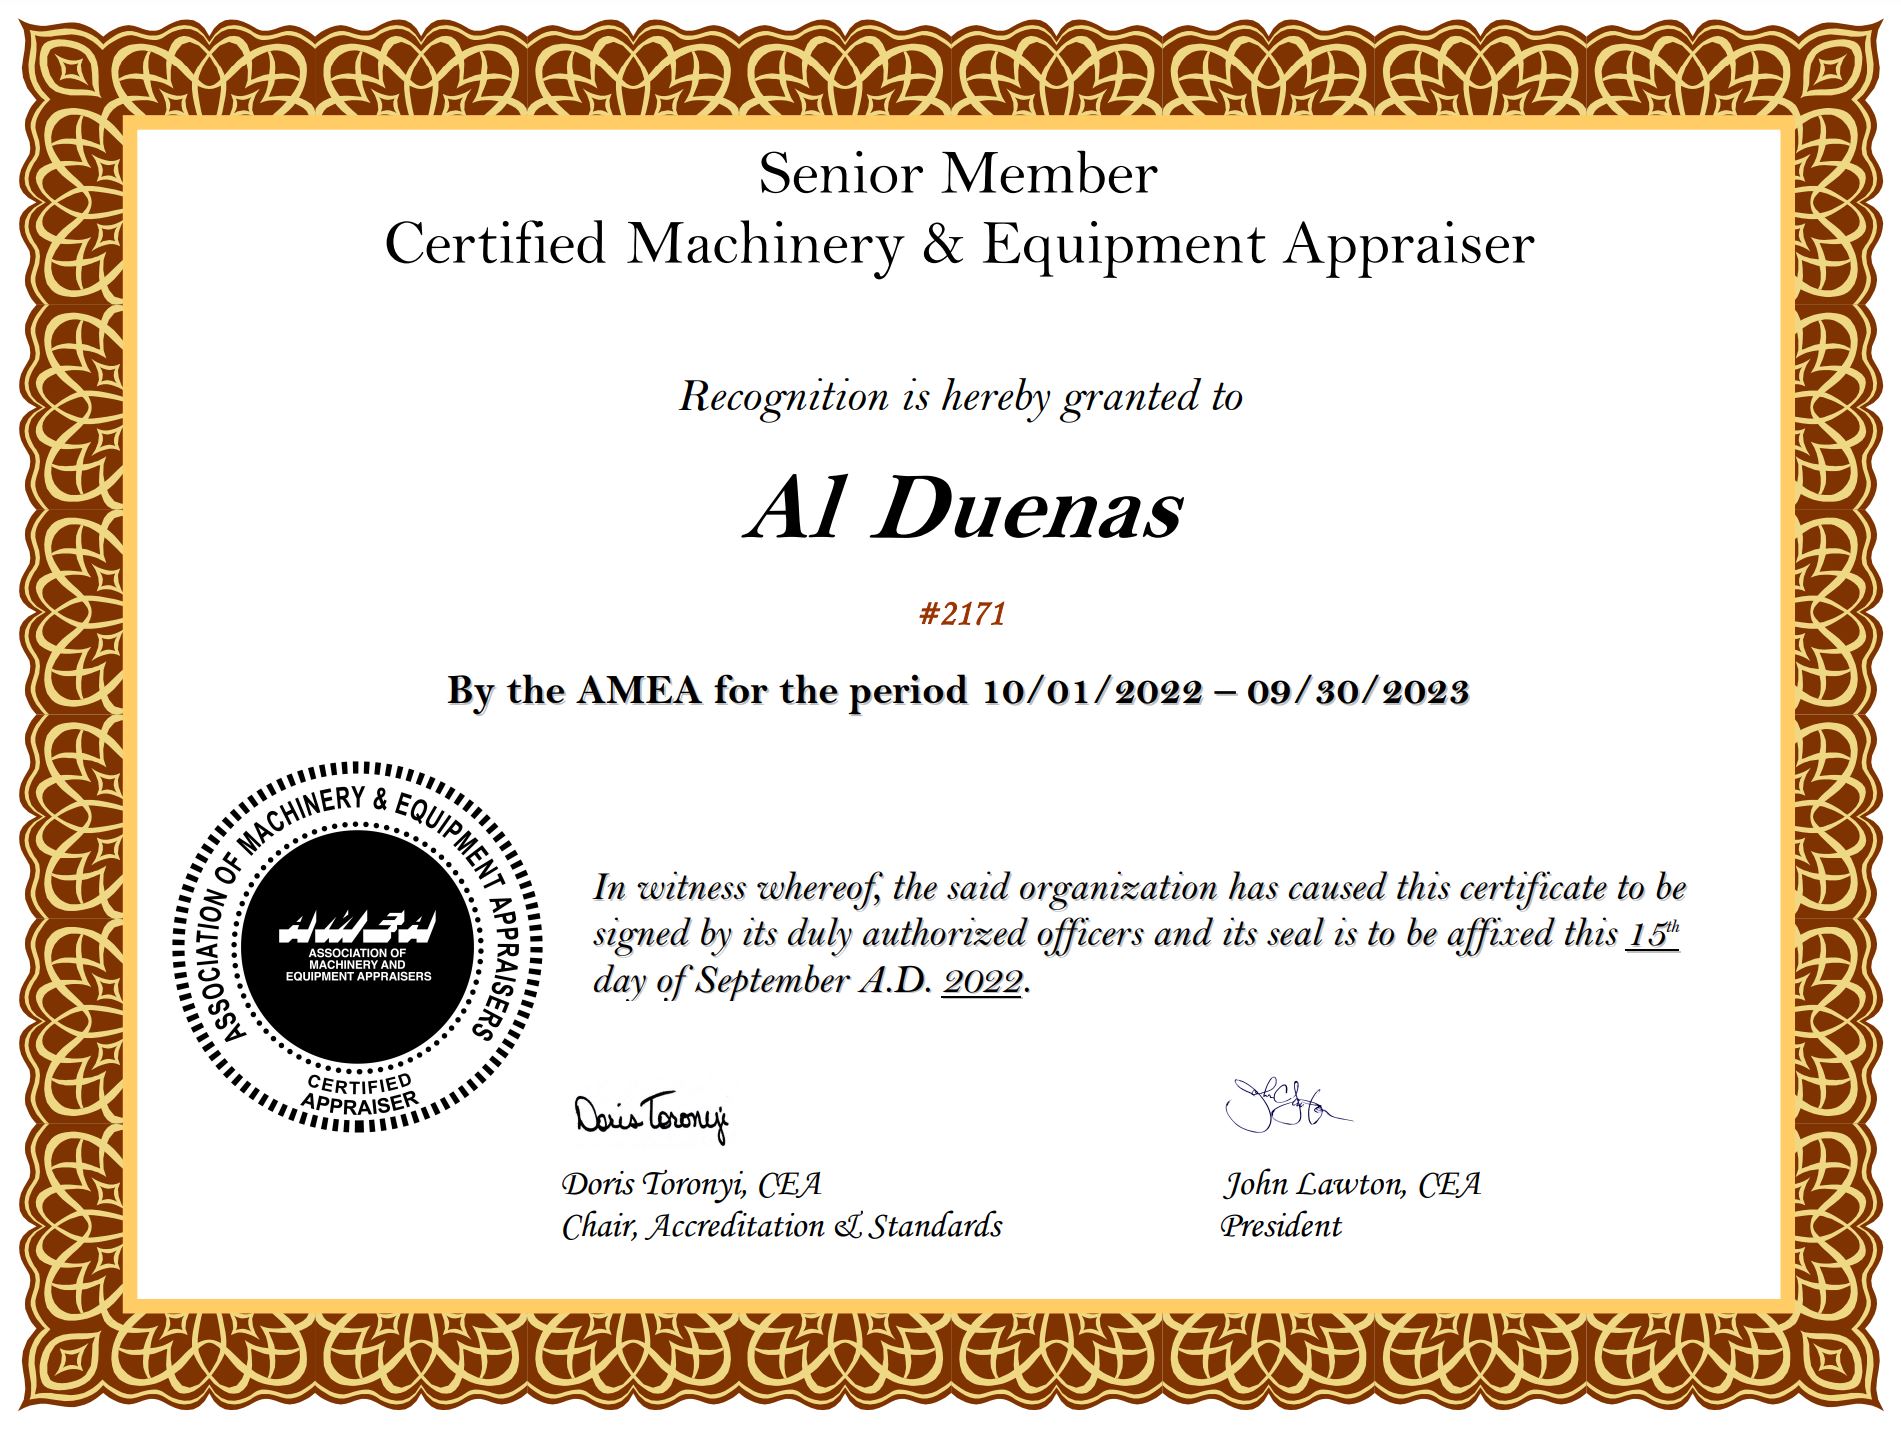 Certified Machinery & Equipment Appraiser